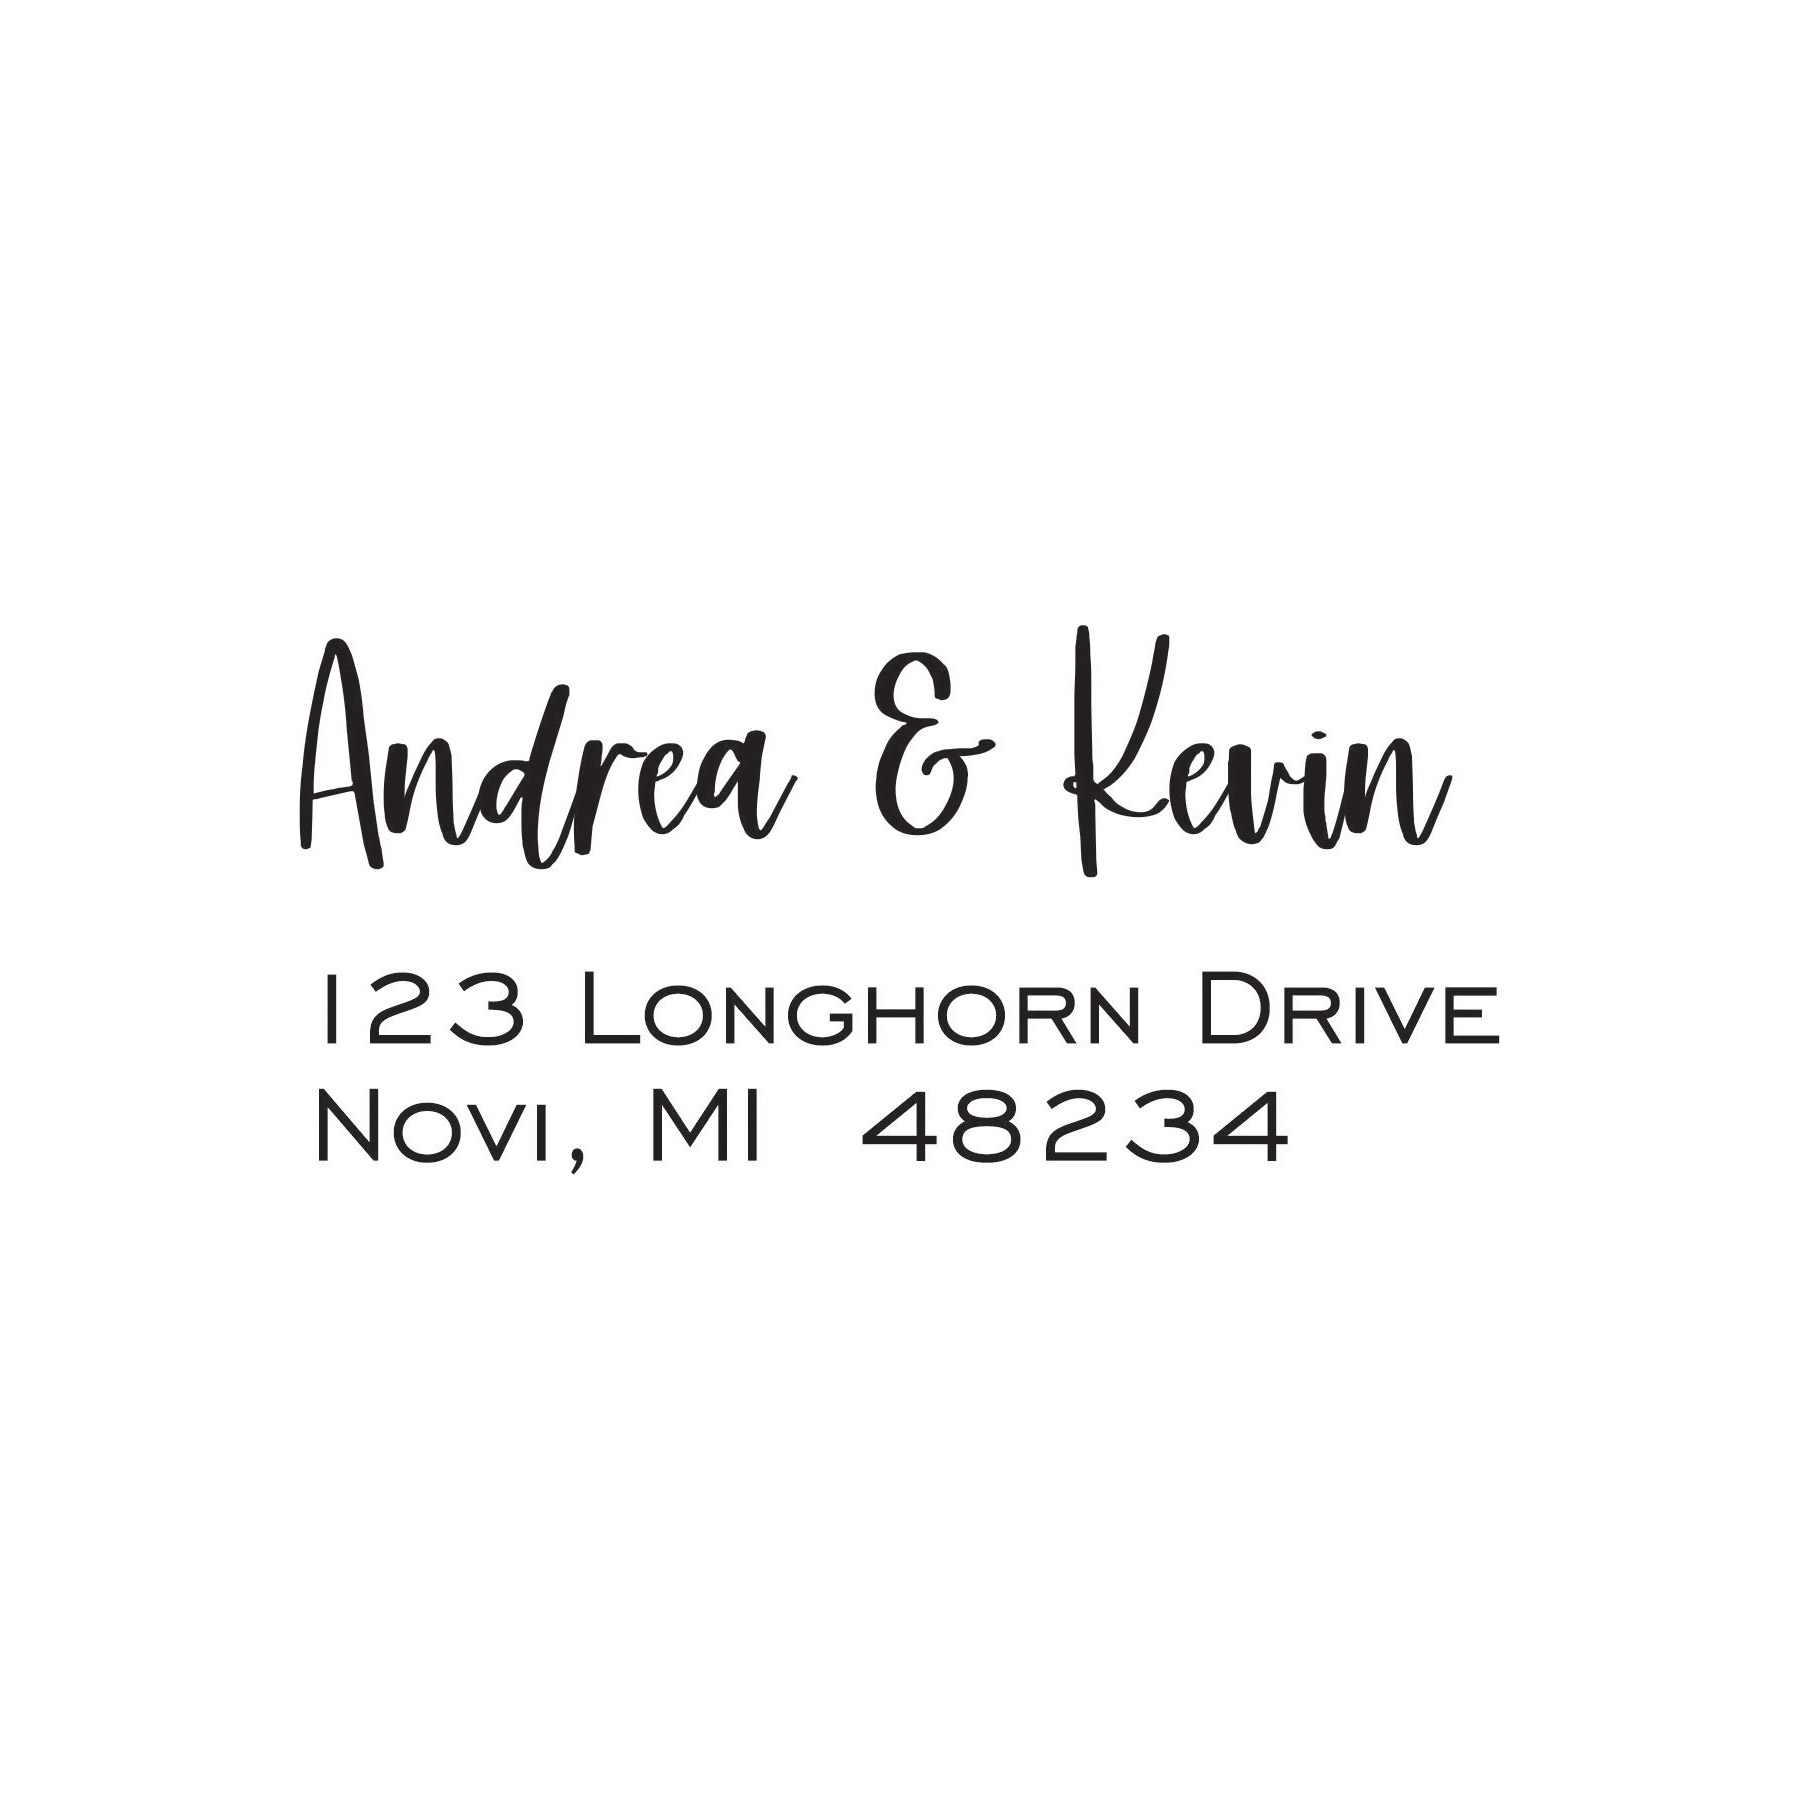 Wedding Stamp C - Address